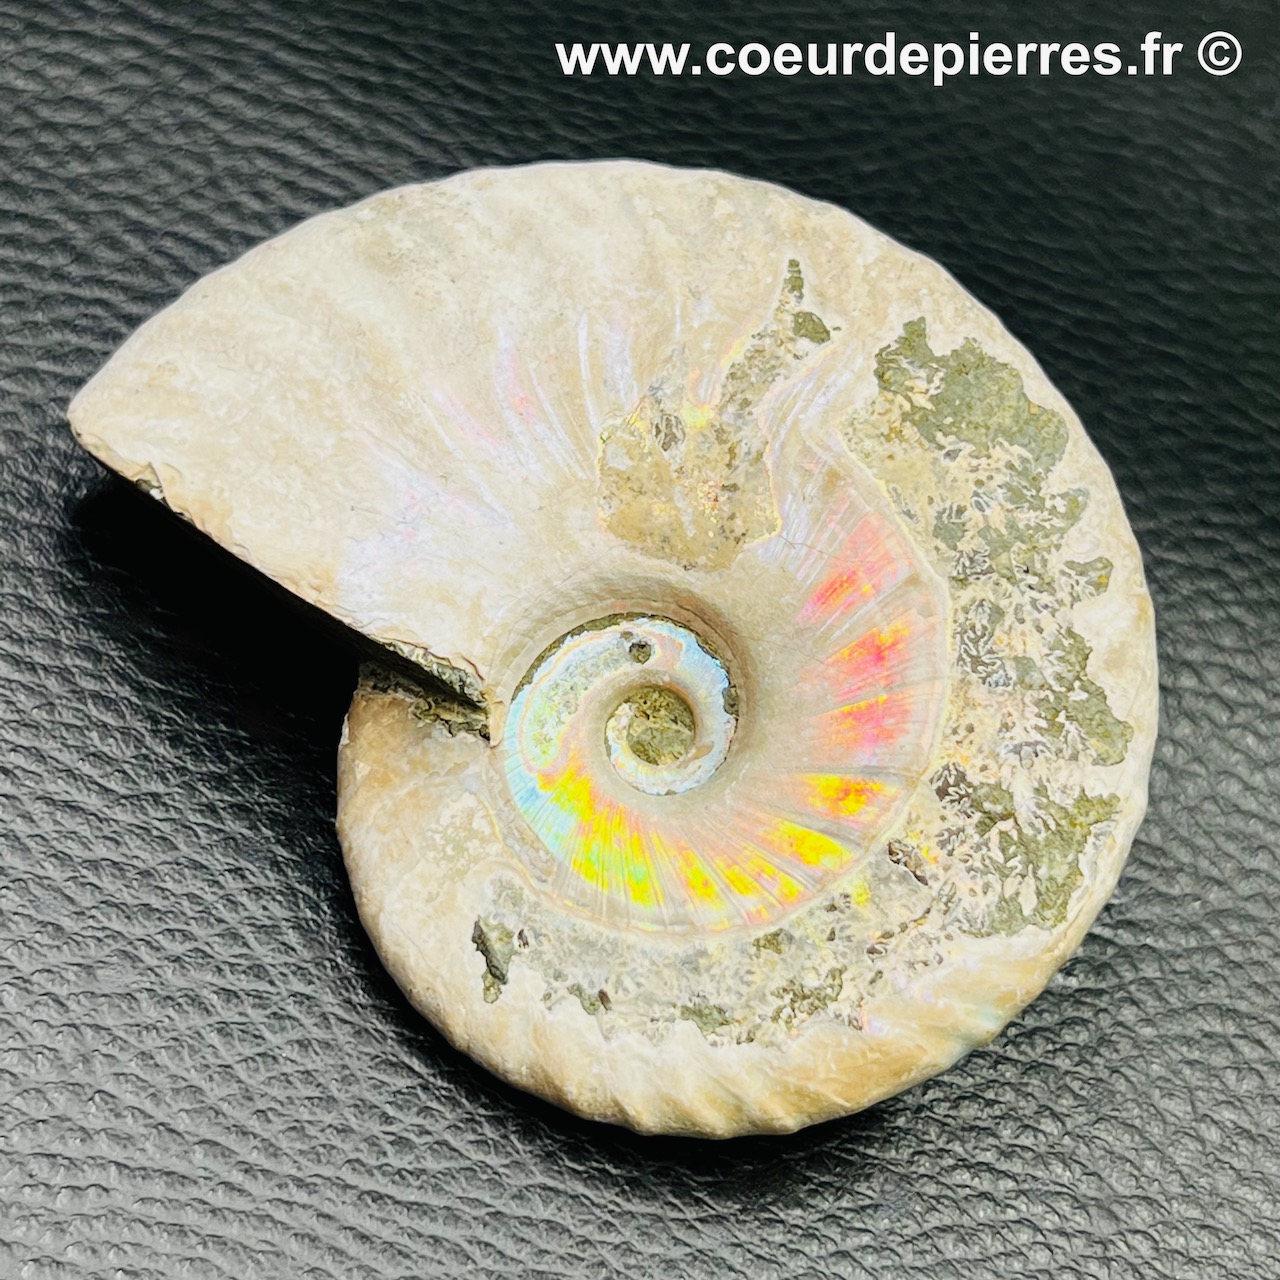 Ammonite iridescente de Madagascar (réf amd11)